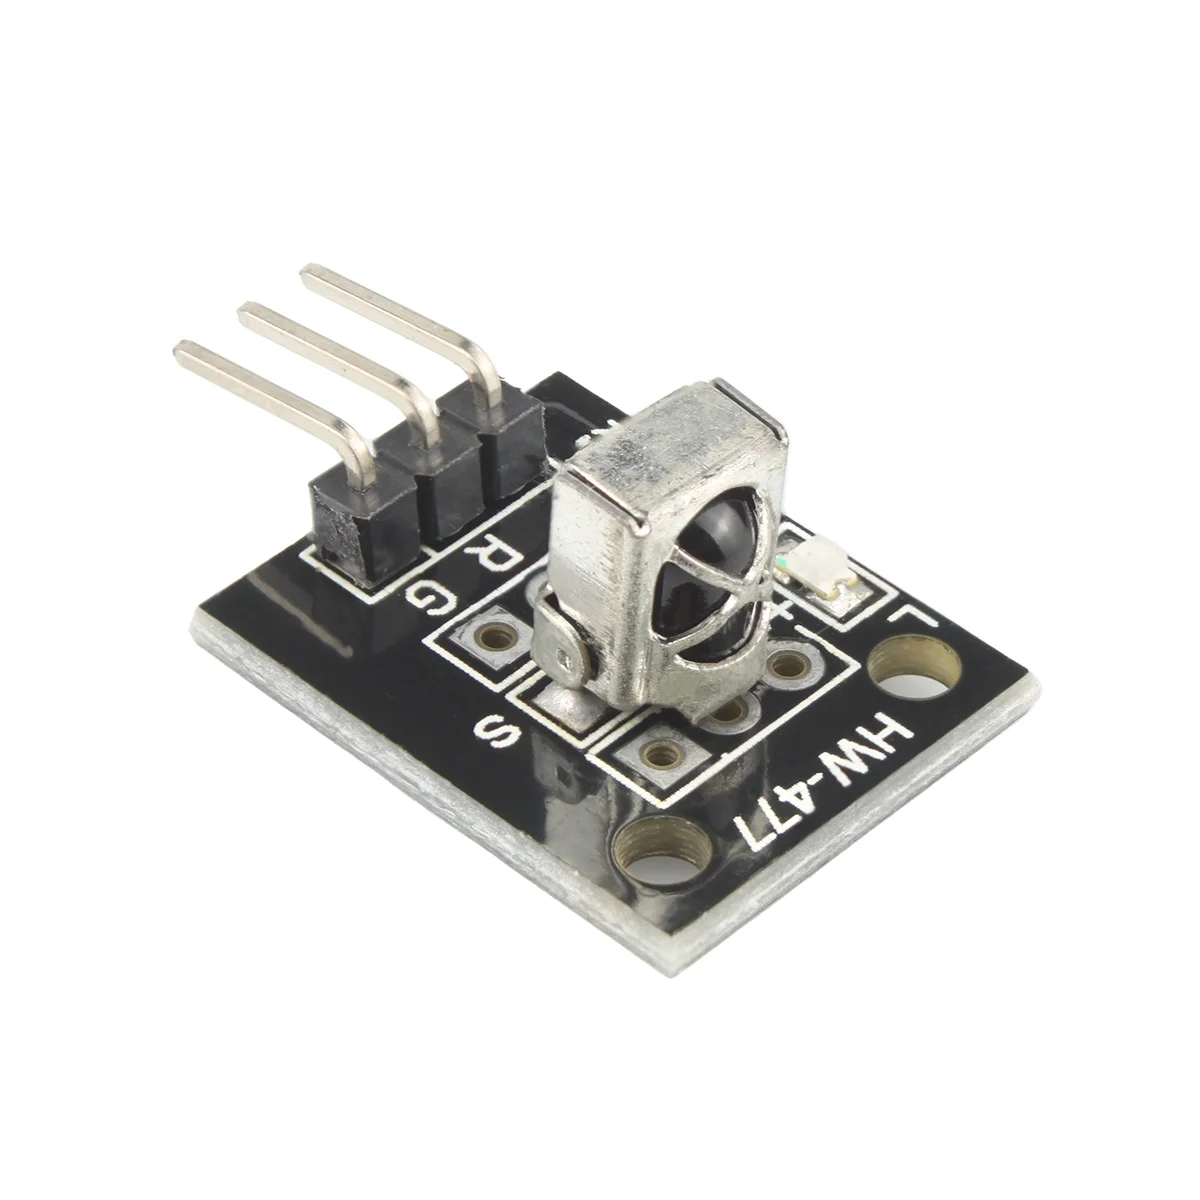 

10pcs 3pin KY-022 TL1838 VS1838B HX1838 Universal IR Infrared Sensor Receiver Module for Arduino Diy Starter Kit